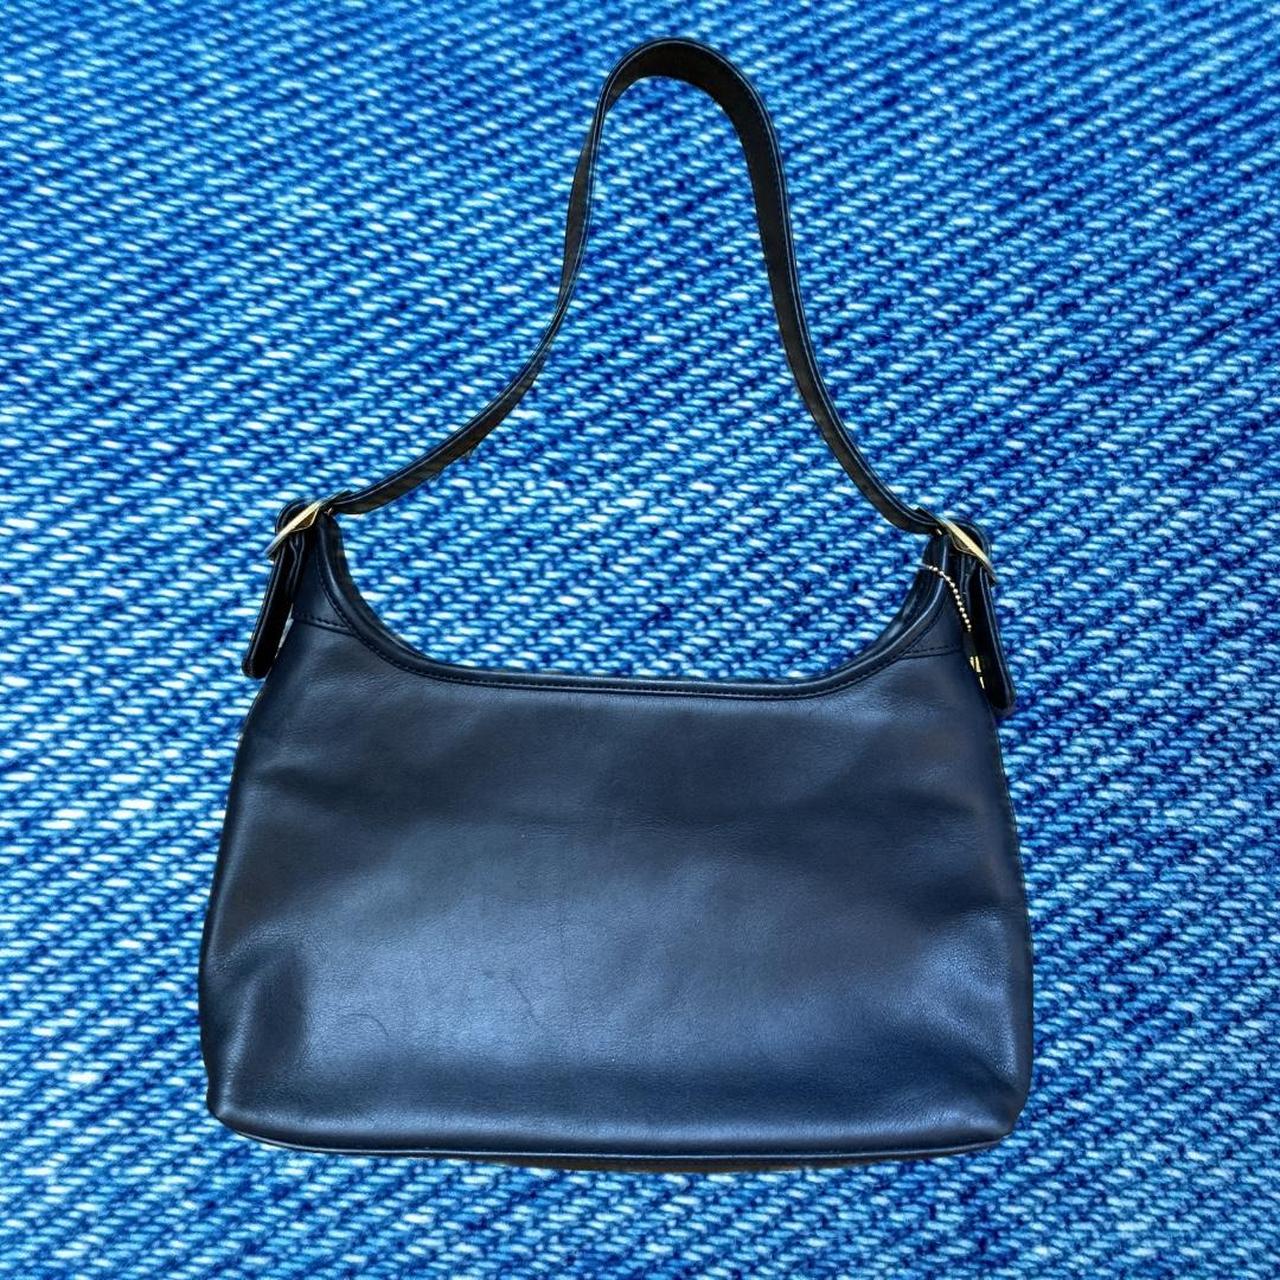 Giani Bernini Women's Navy Bag